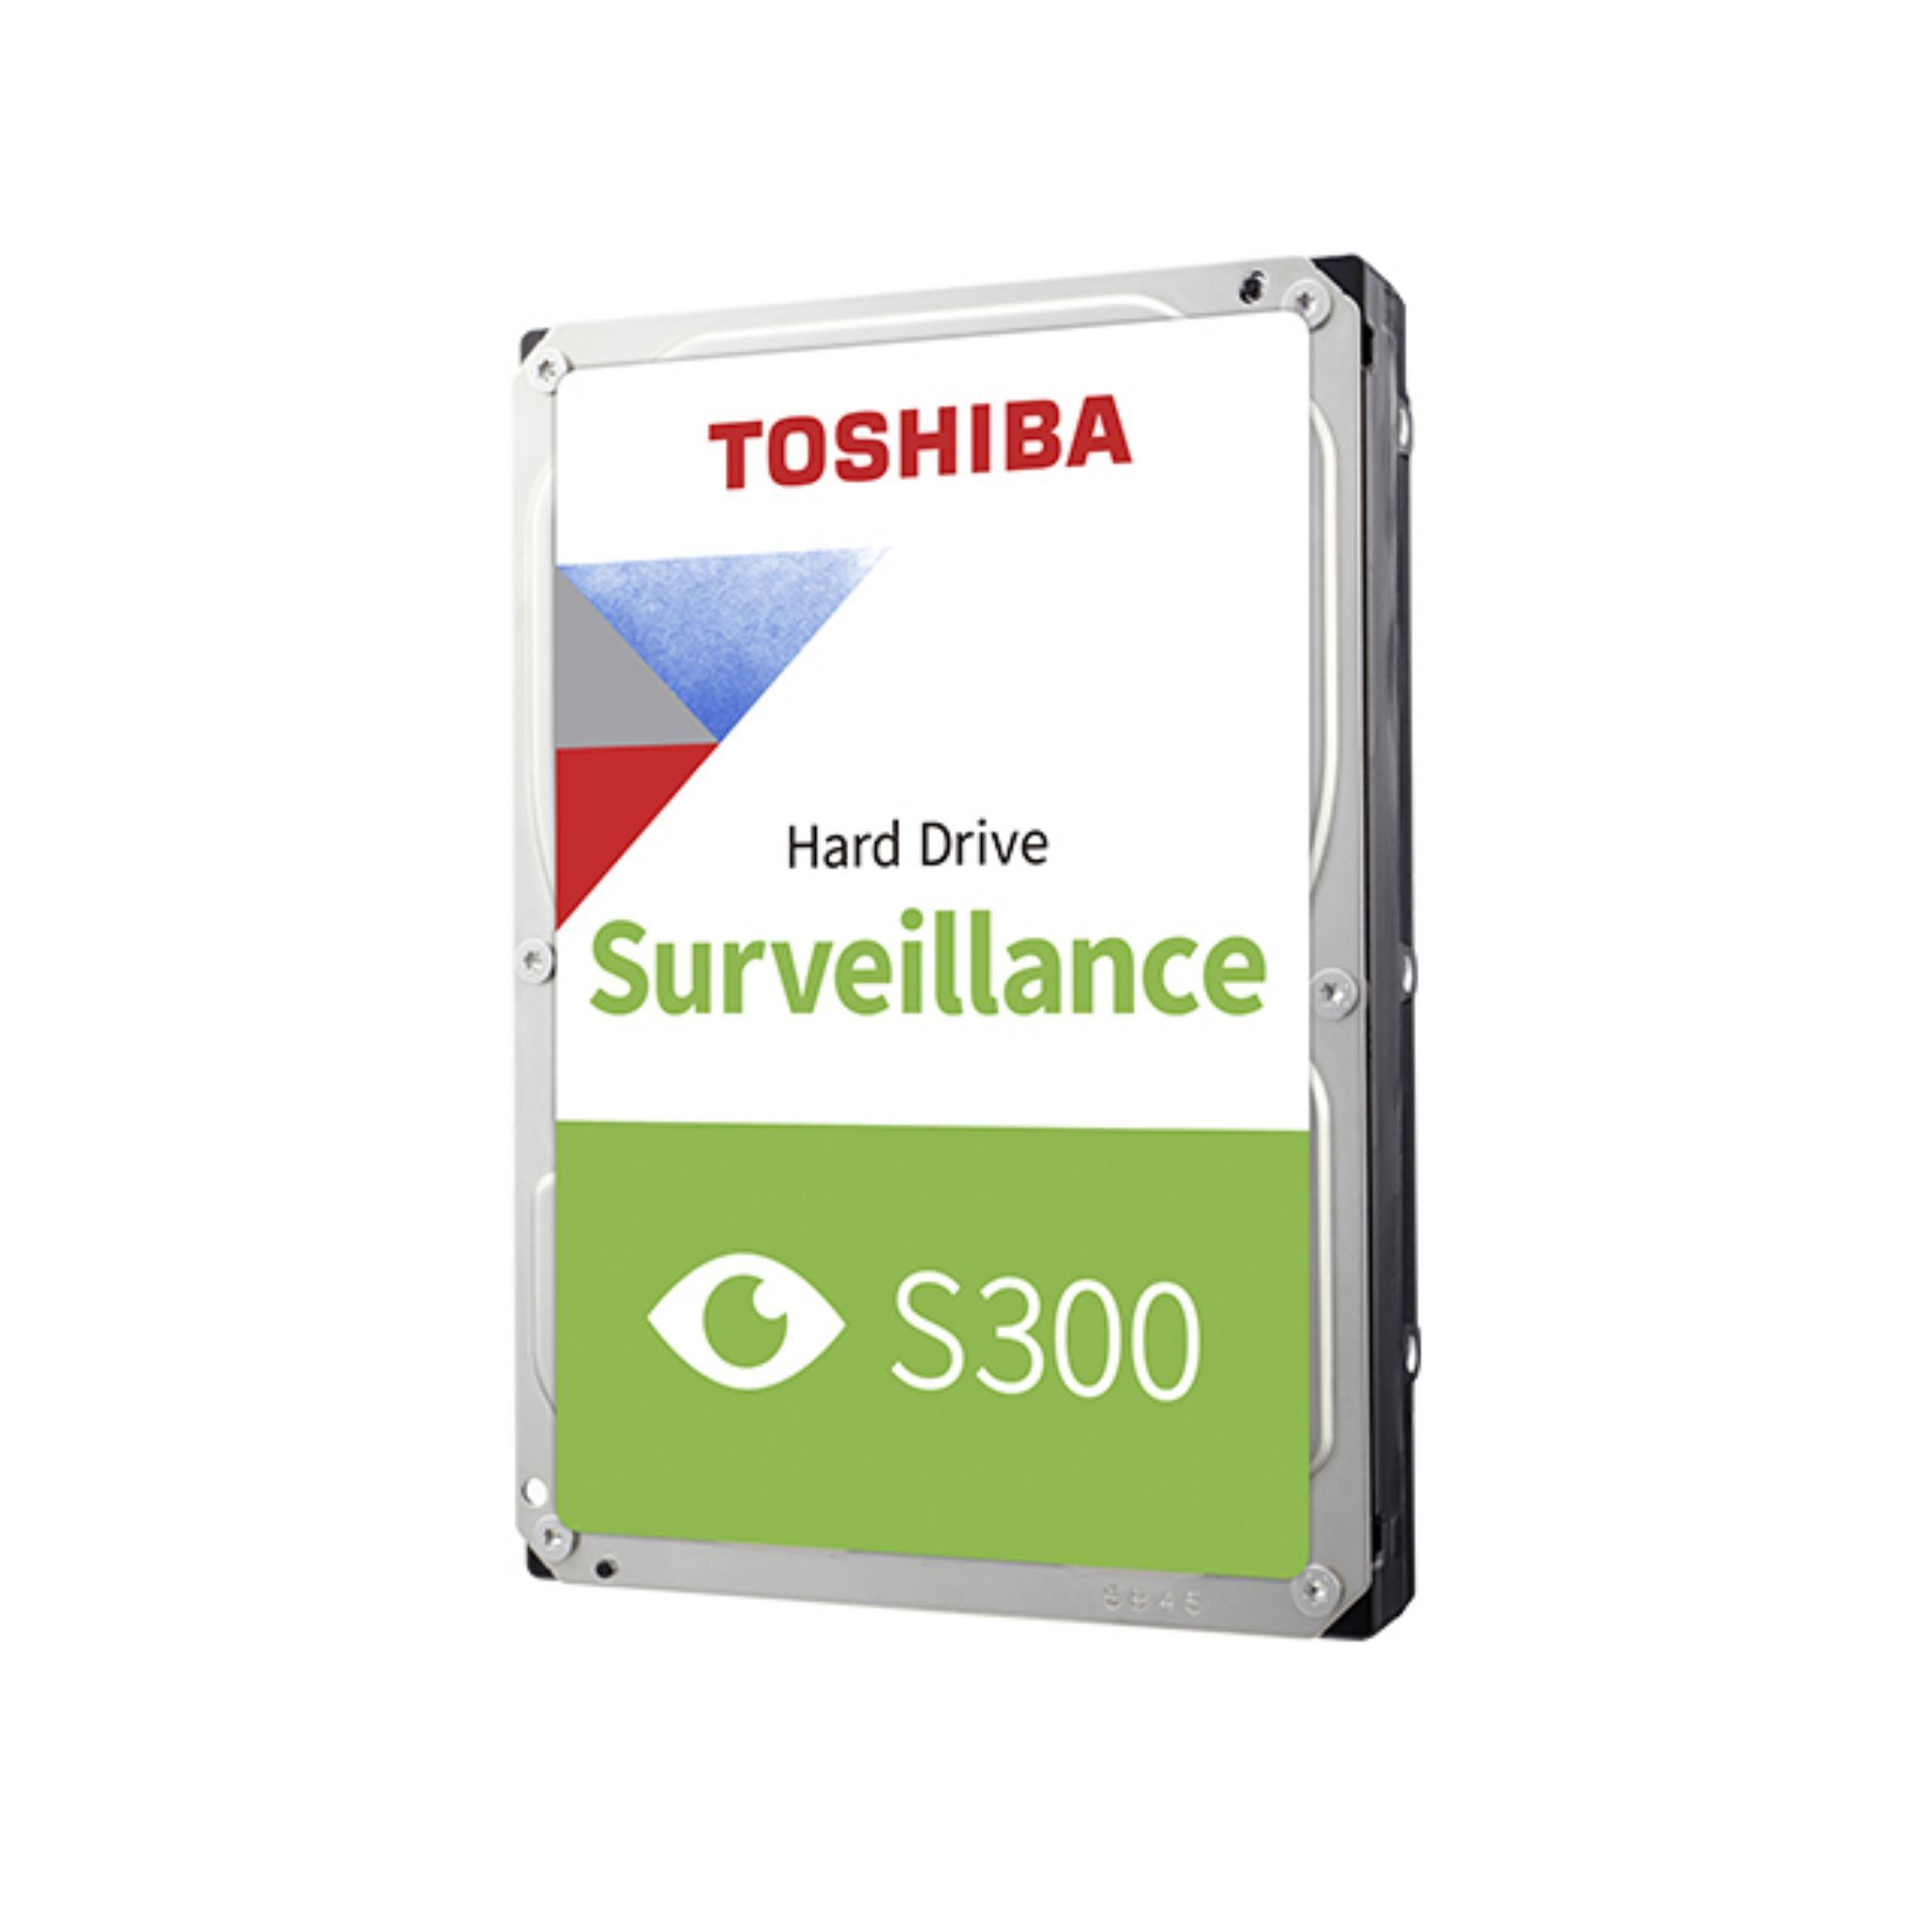 intern TOSHIBA HDD, GB, S300 1000 Surveillance,